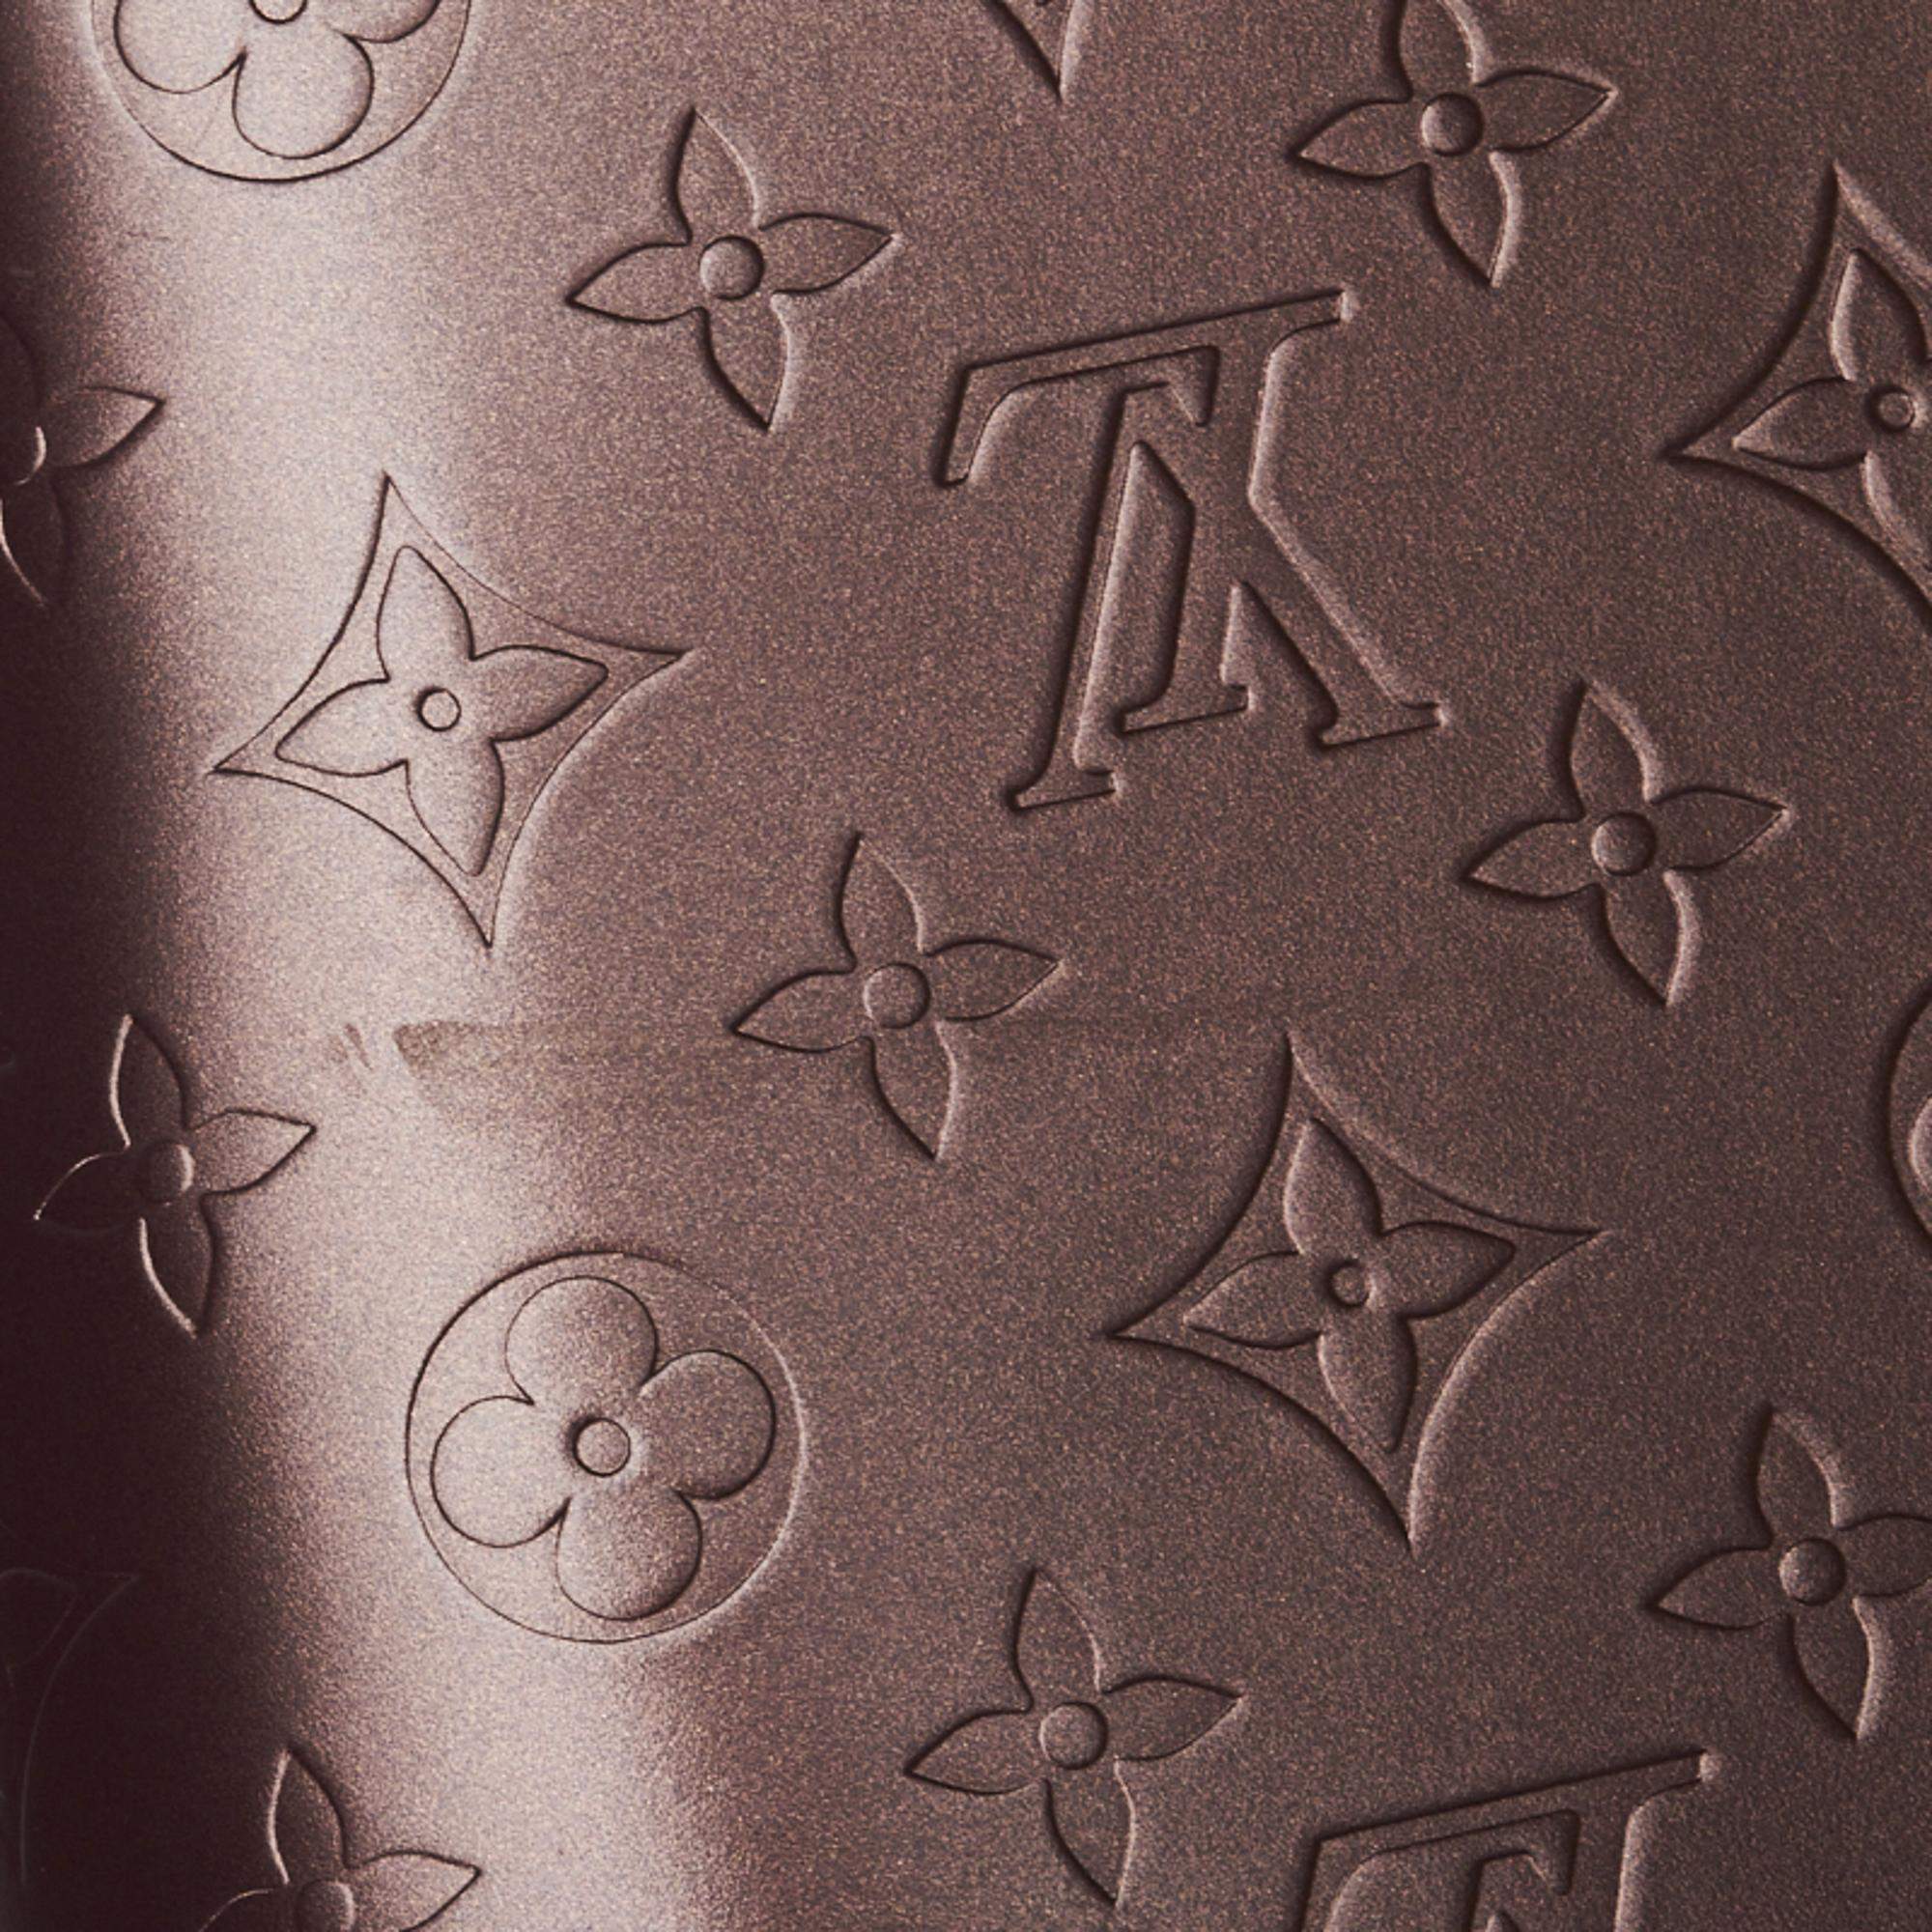 Louis Vuitton - Grey Monogram, iPhone Wallpapers